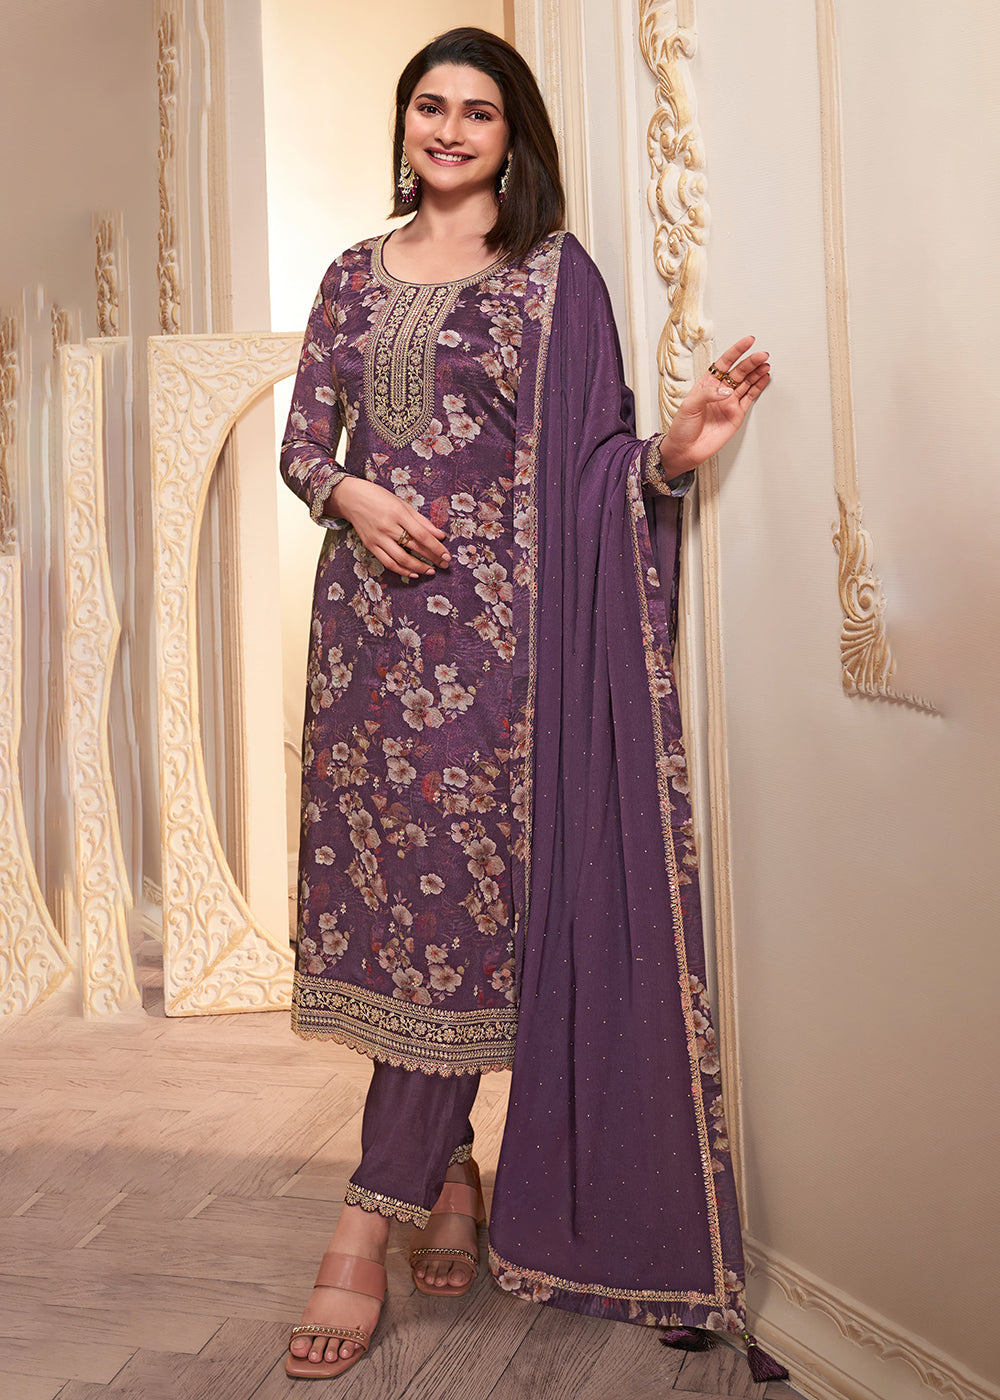 Buy Now Purple Digital Printed Chinnon Festive Salwar Kameez Online in USA, UK, Canada, Germany, Australia & Worldwide at Empress Clothing. 